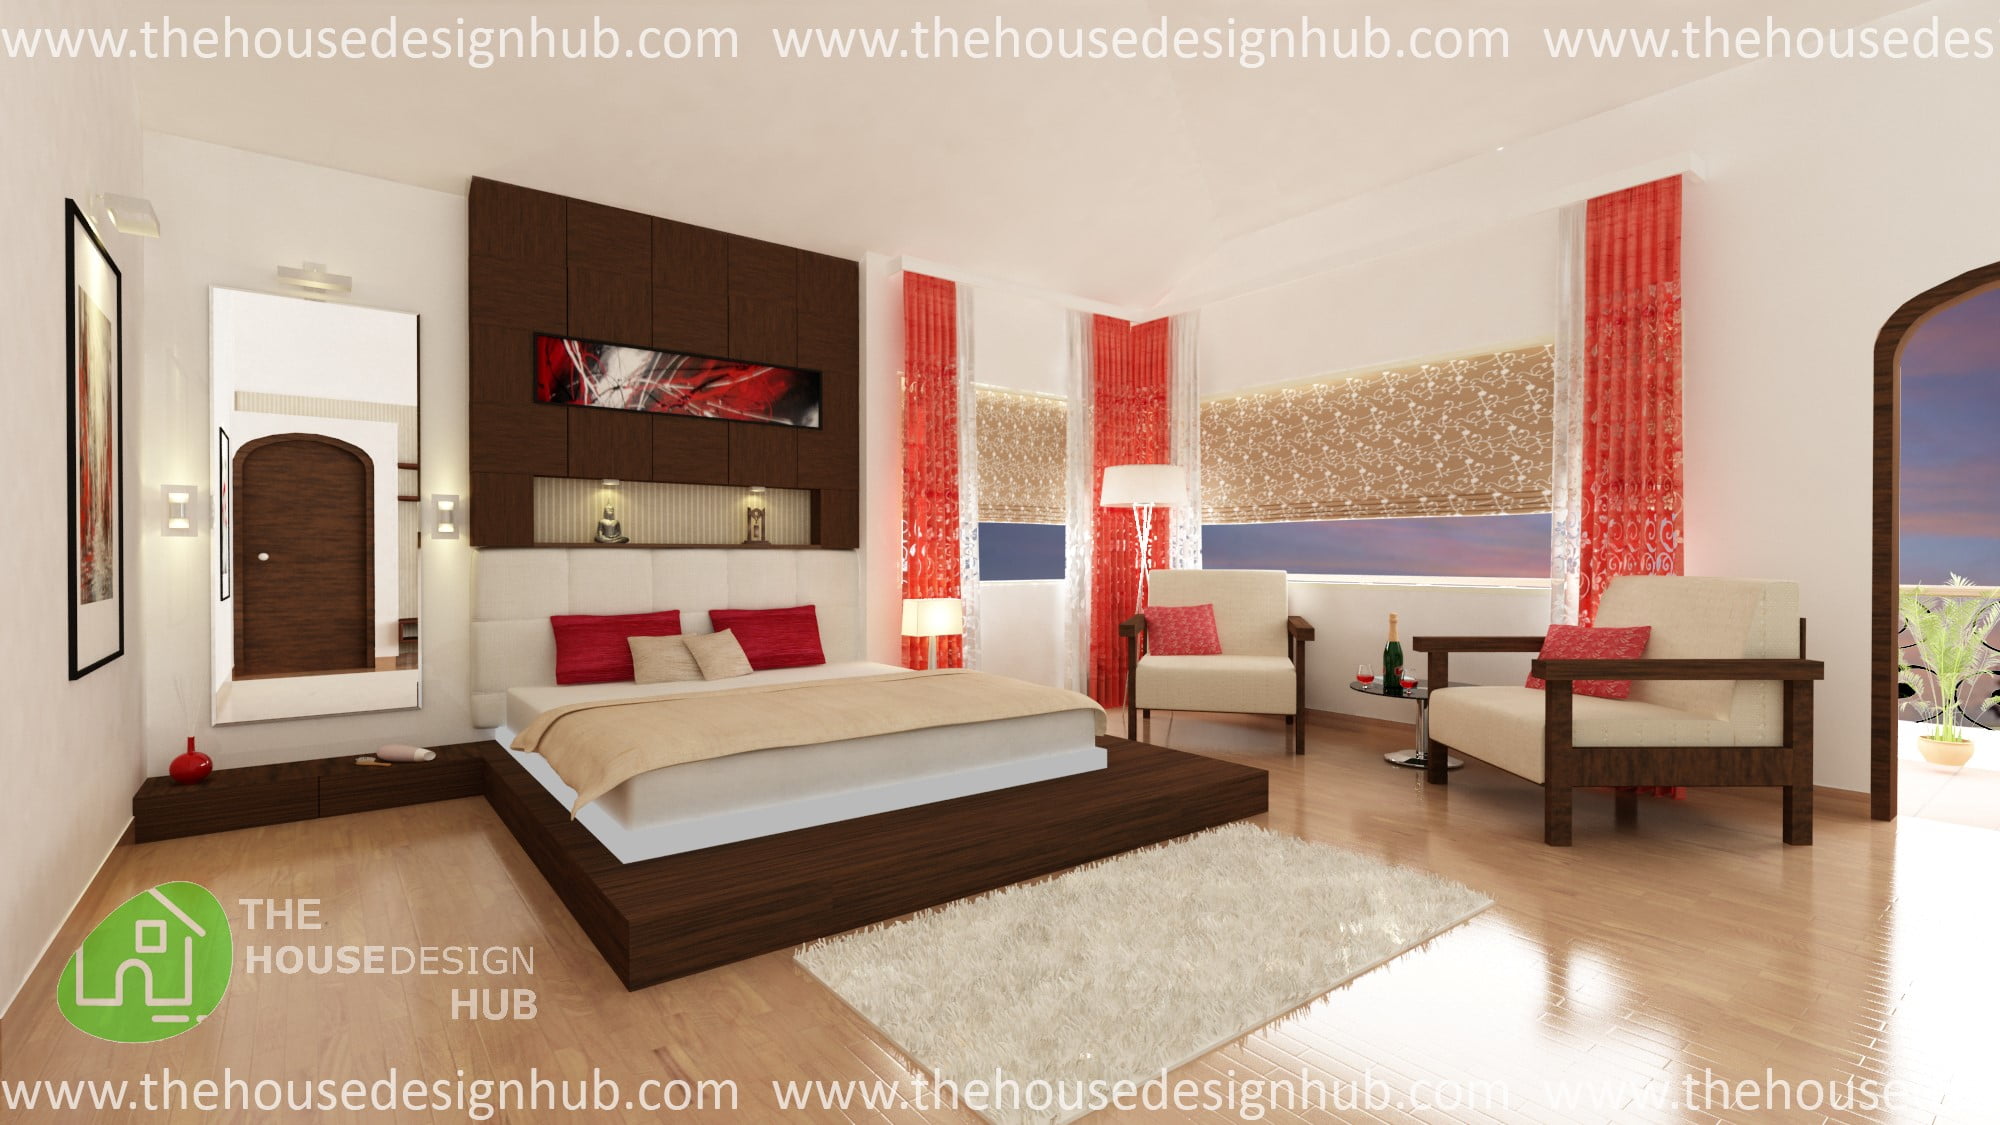 06I. Best Design Elements for your White Bedroom Interior Interior Designs